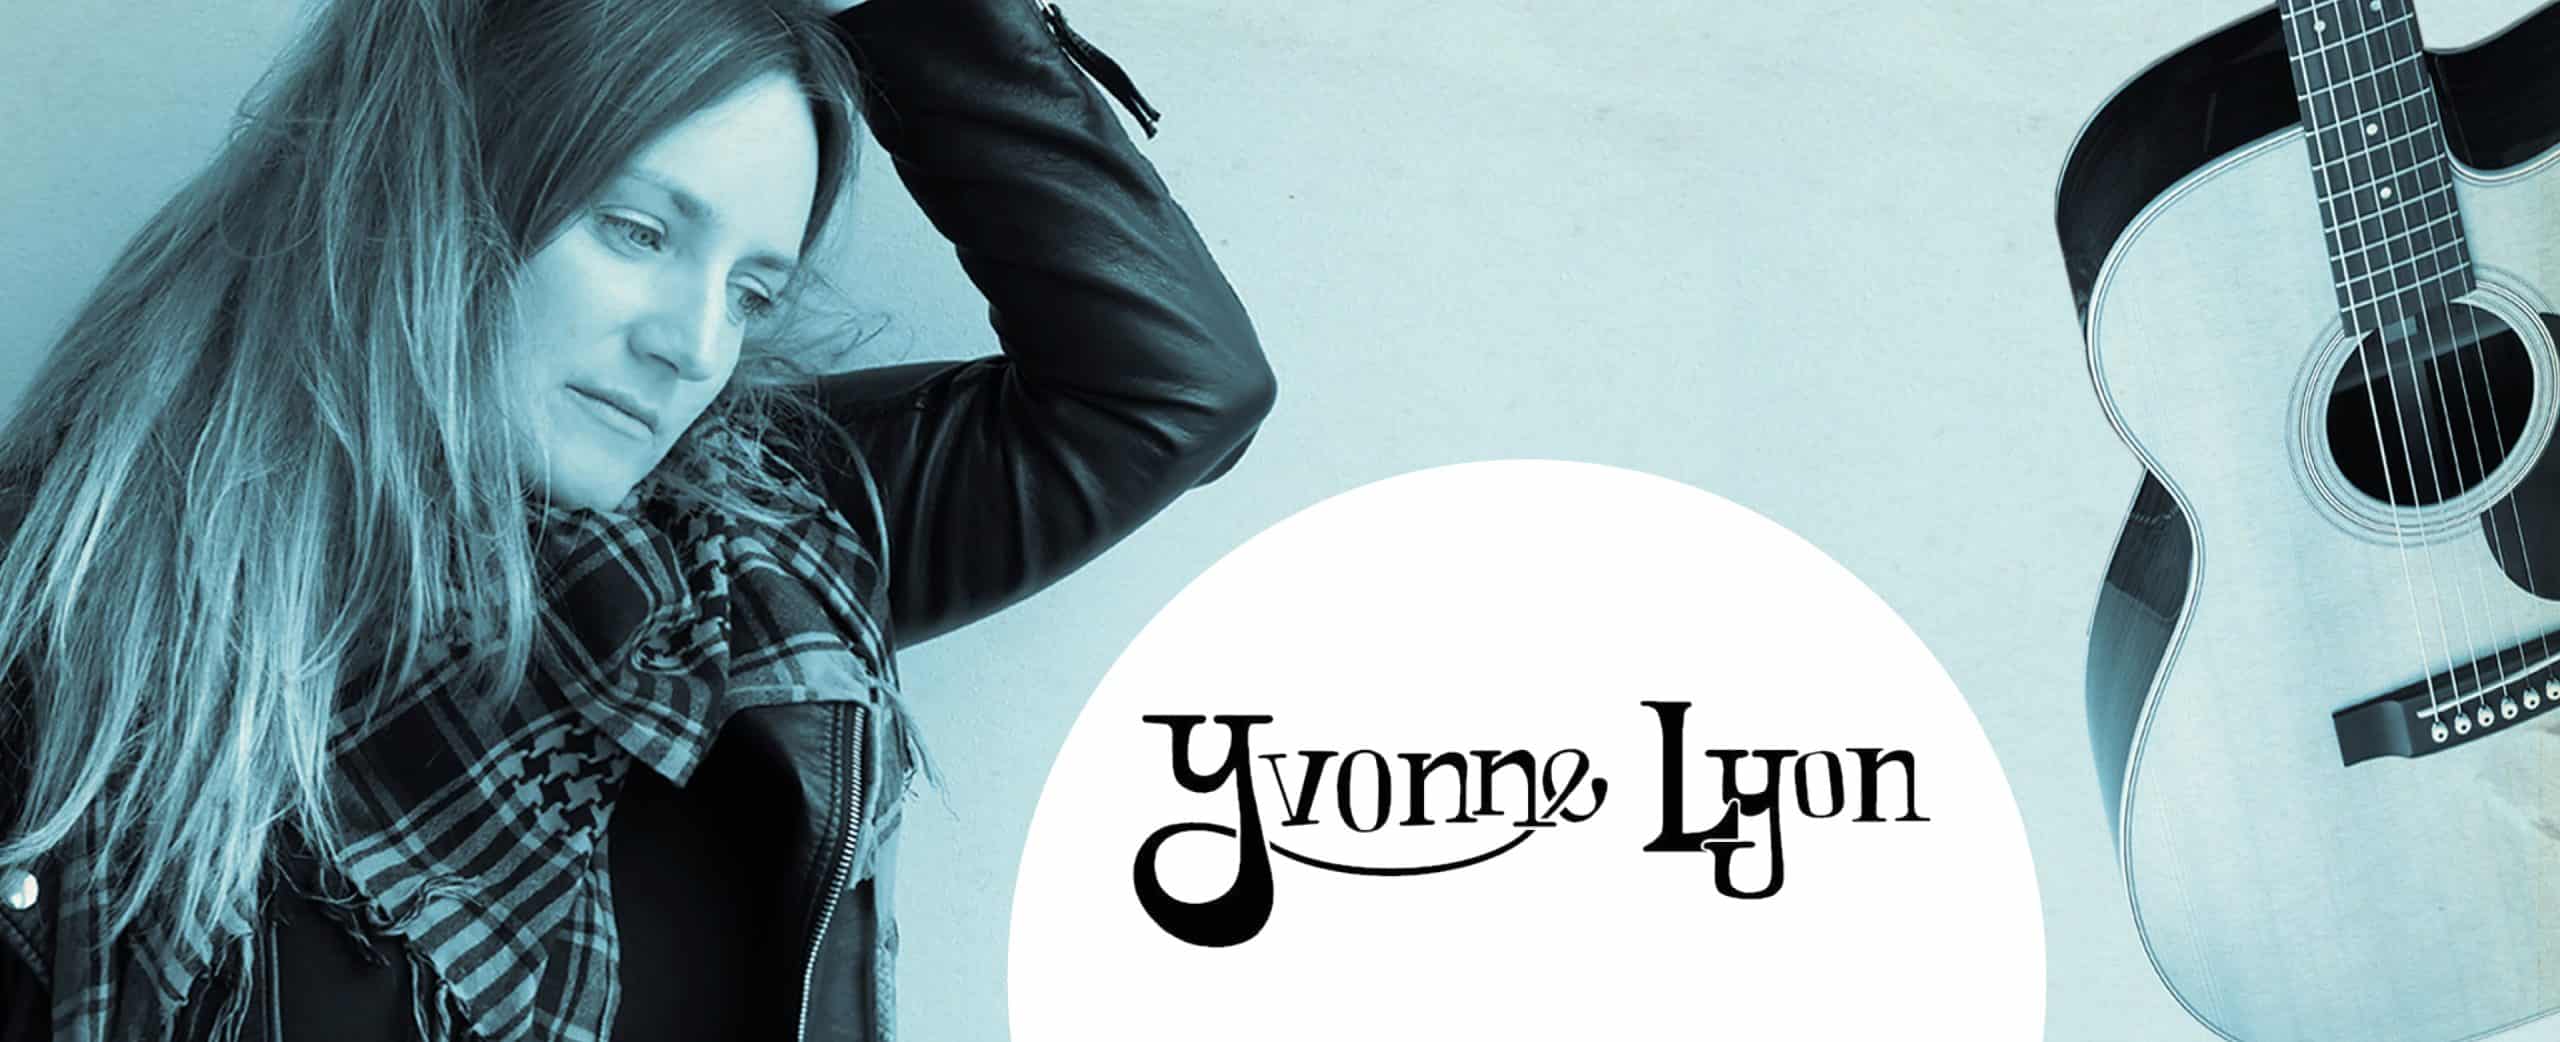 Yvonne Lyon - Songs So Far